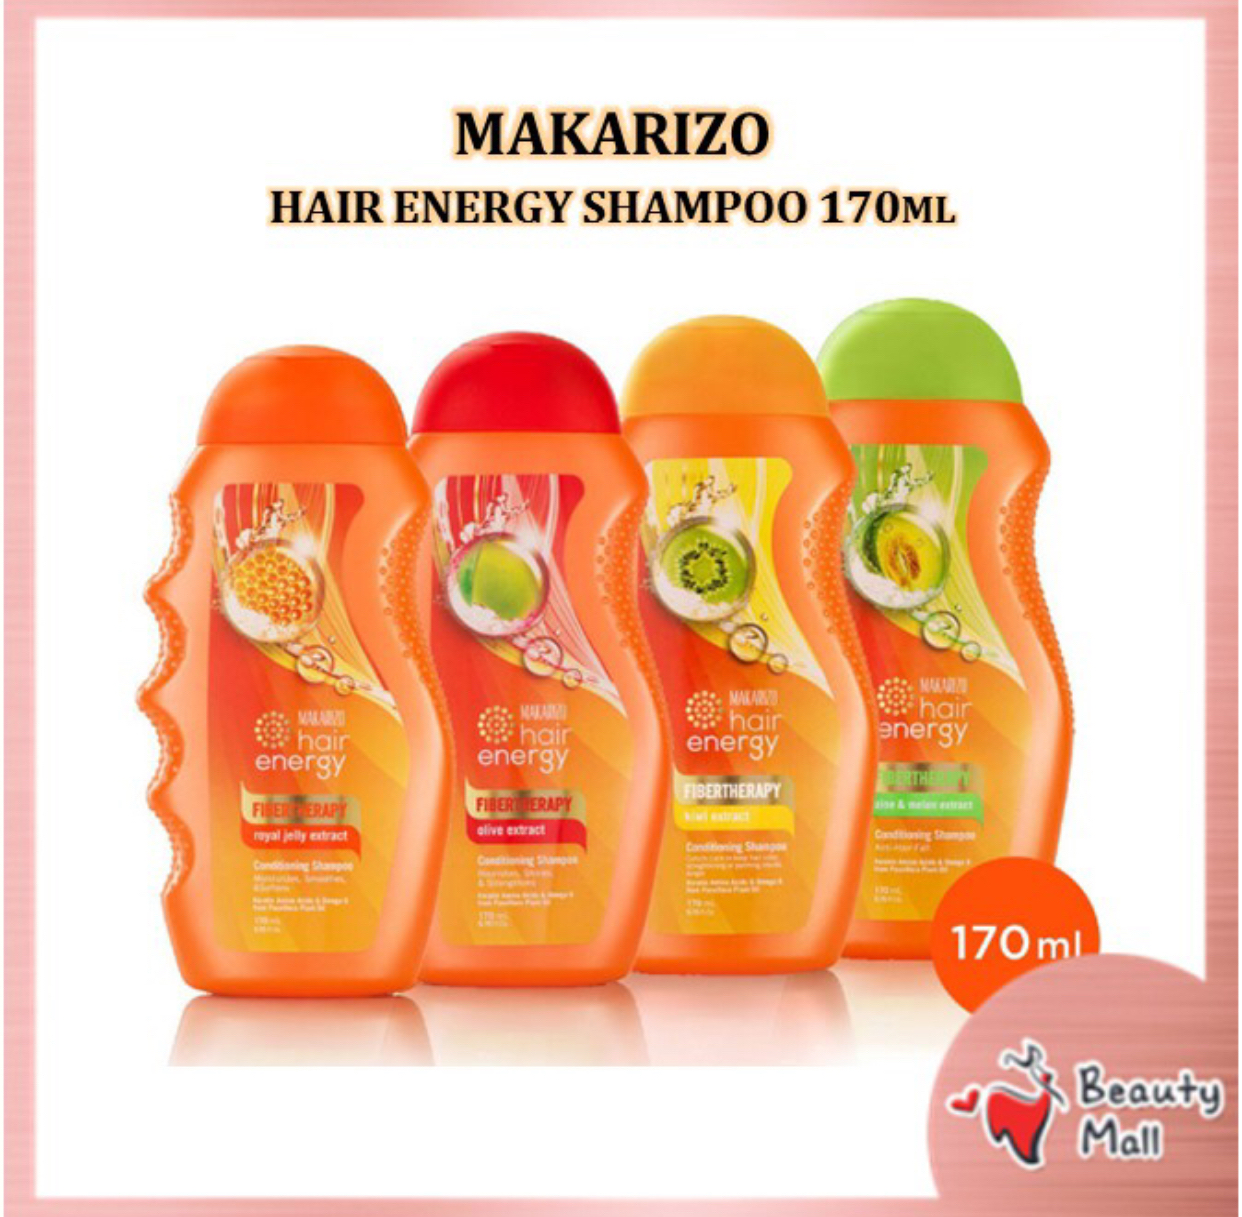 3. makarizo hair energy shampoo - 19rb